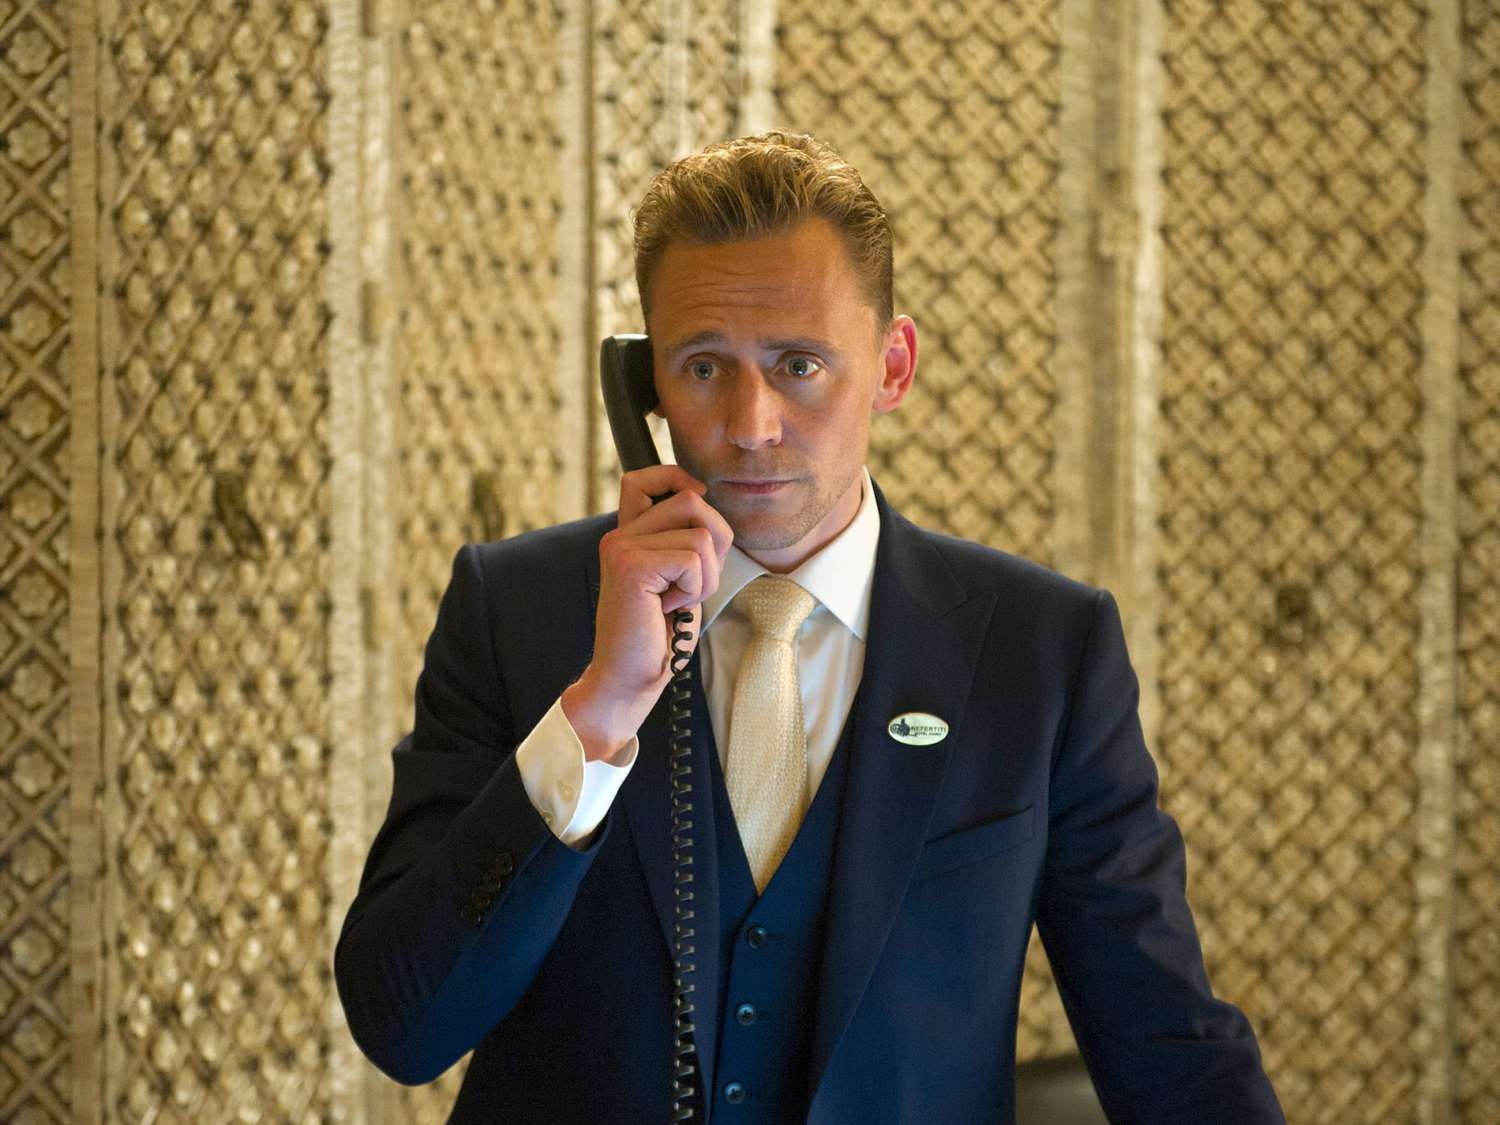 Jonathan&nbsp;(Tom Hiddleston), The Night Manager